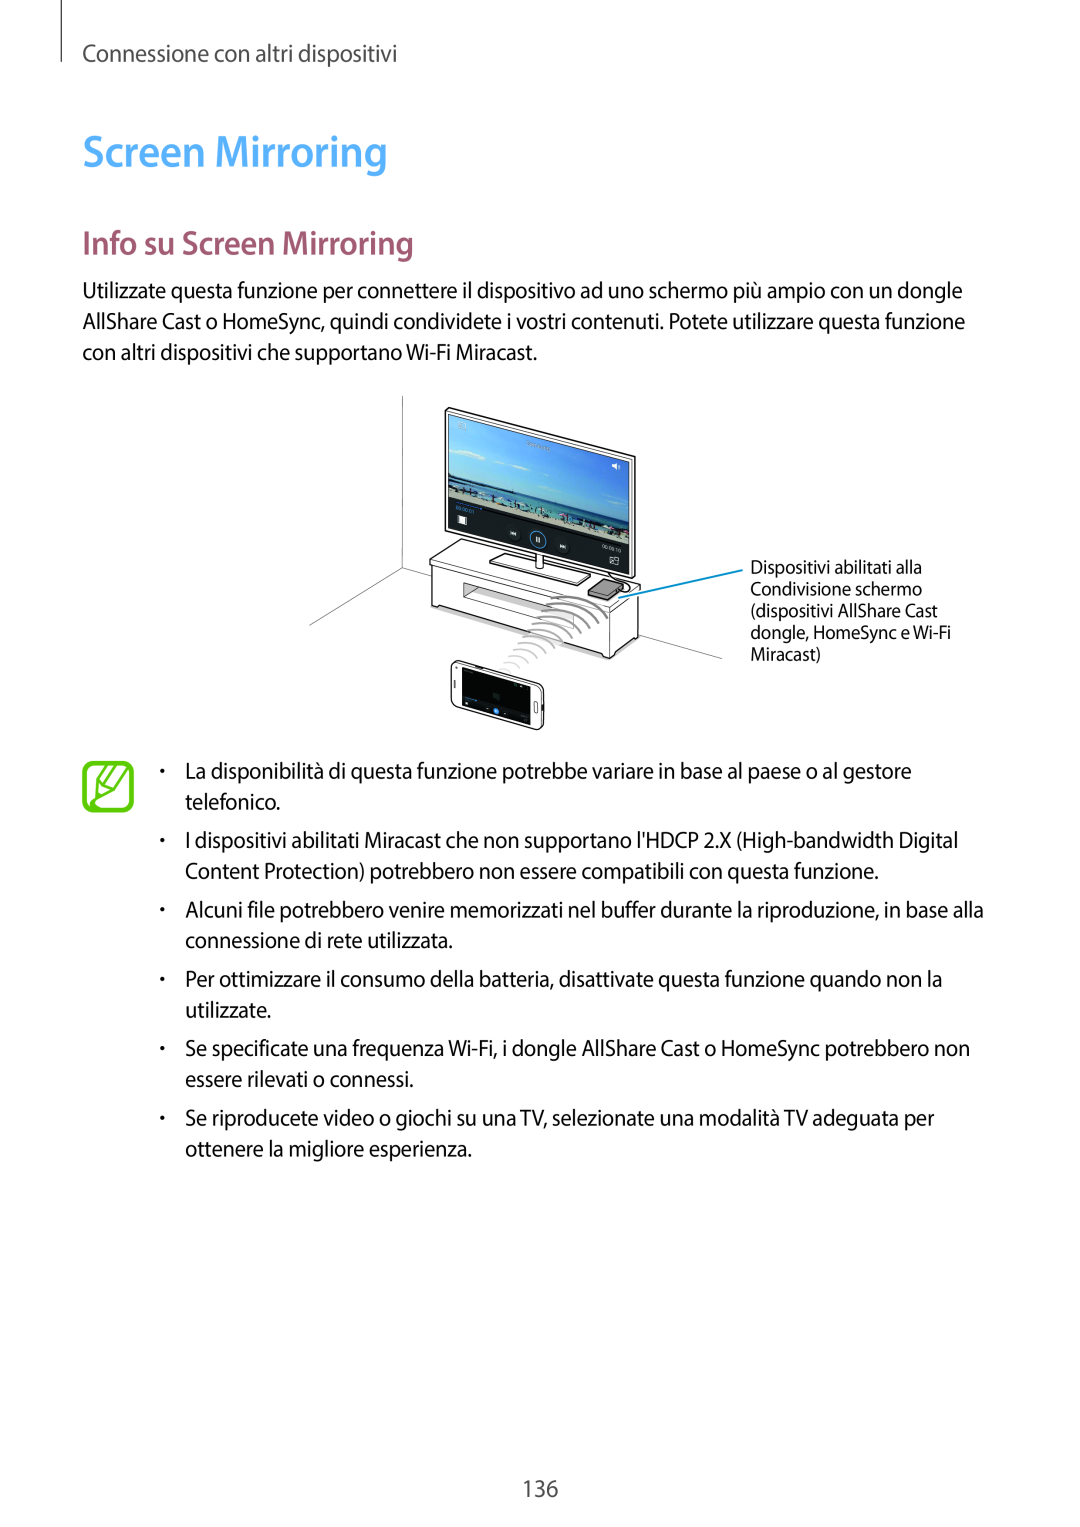 Samsung SM-G800FZKAAUT, SM-G800FZWADBT, SM-G800FZDADBT manual Info su Screen Mirroring, Connessione con altri dispositivi 